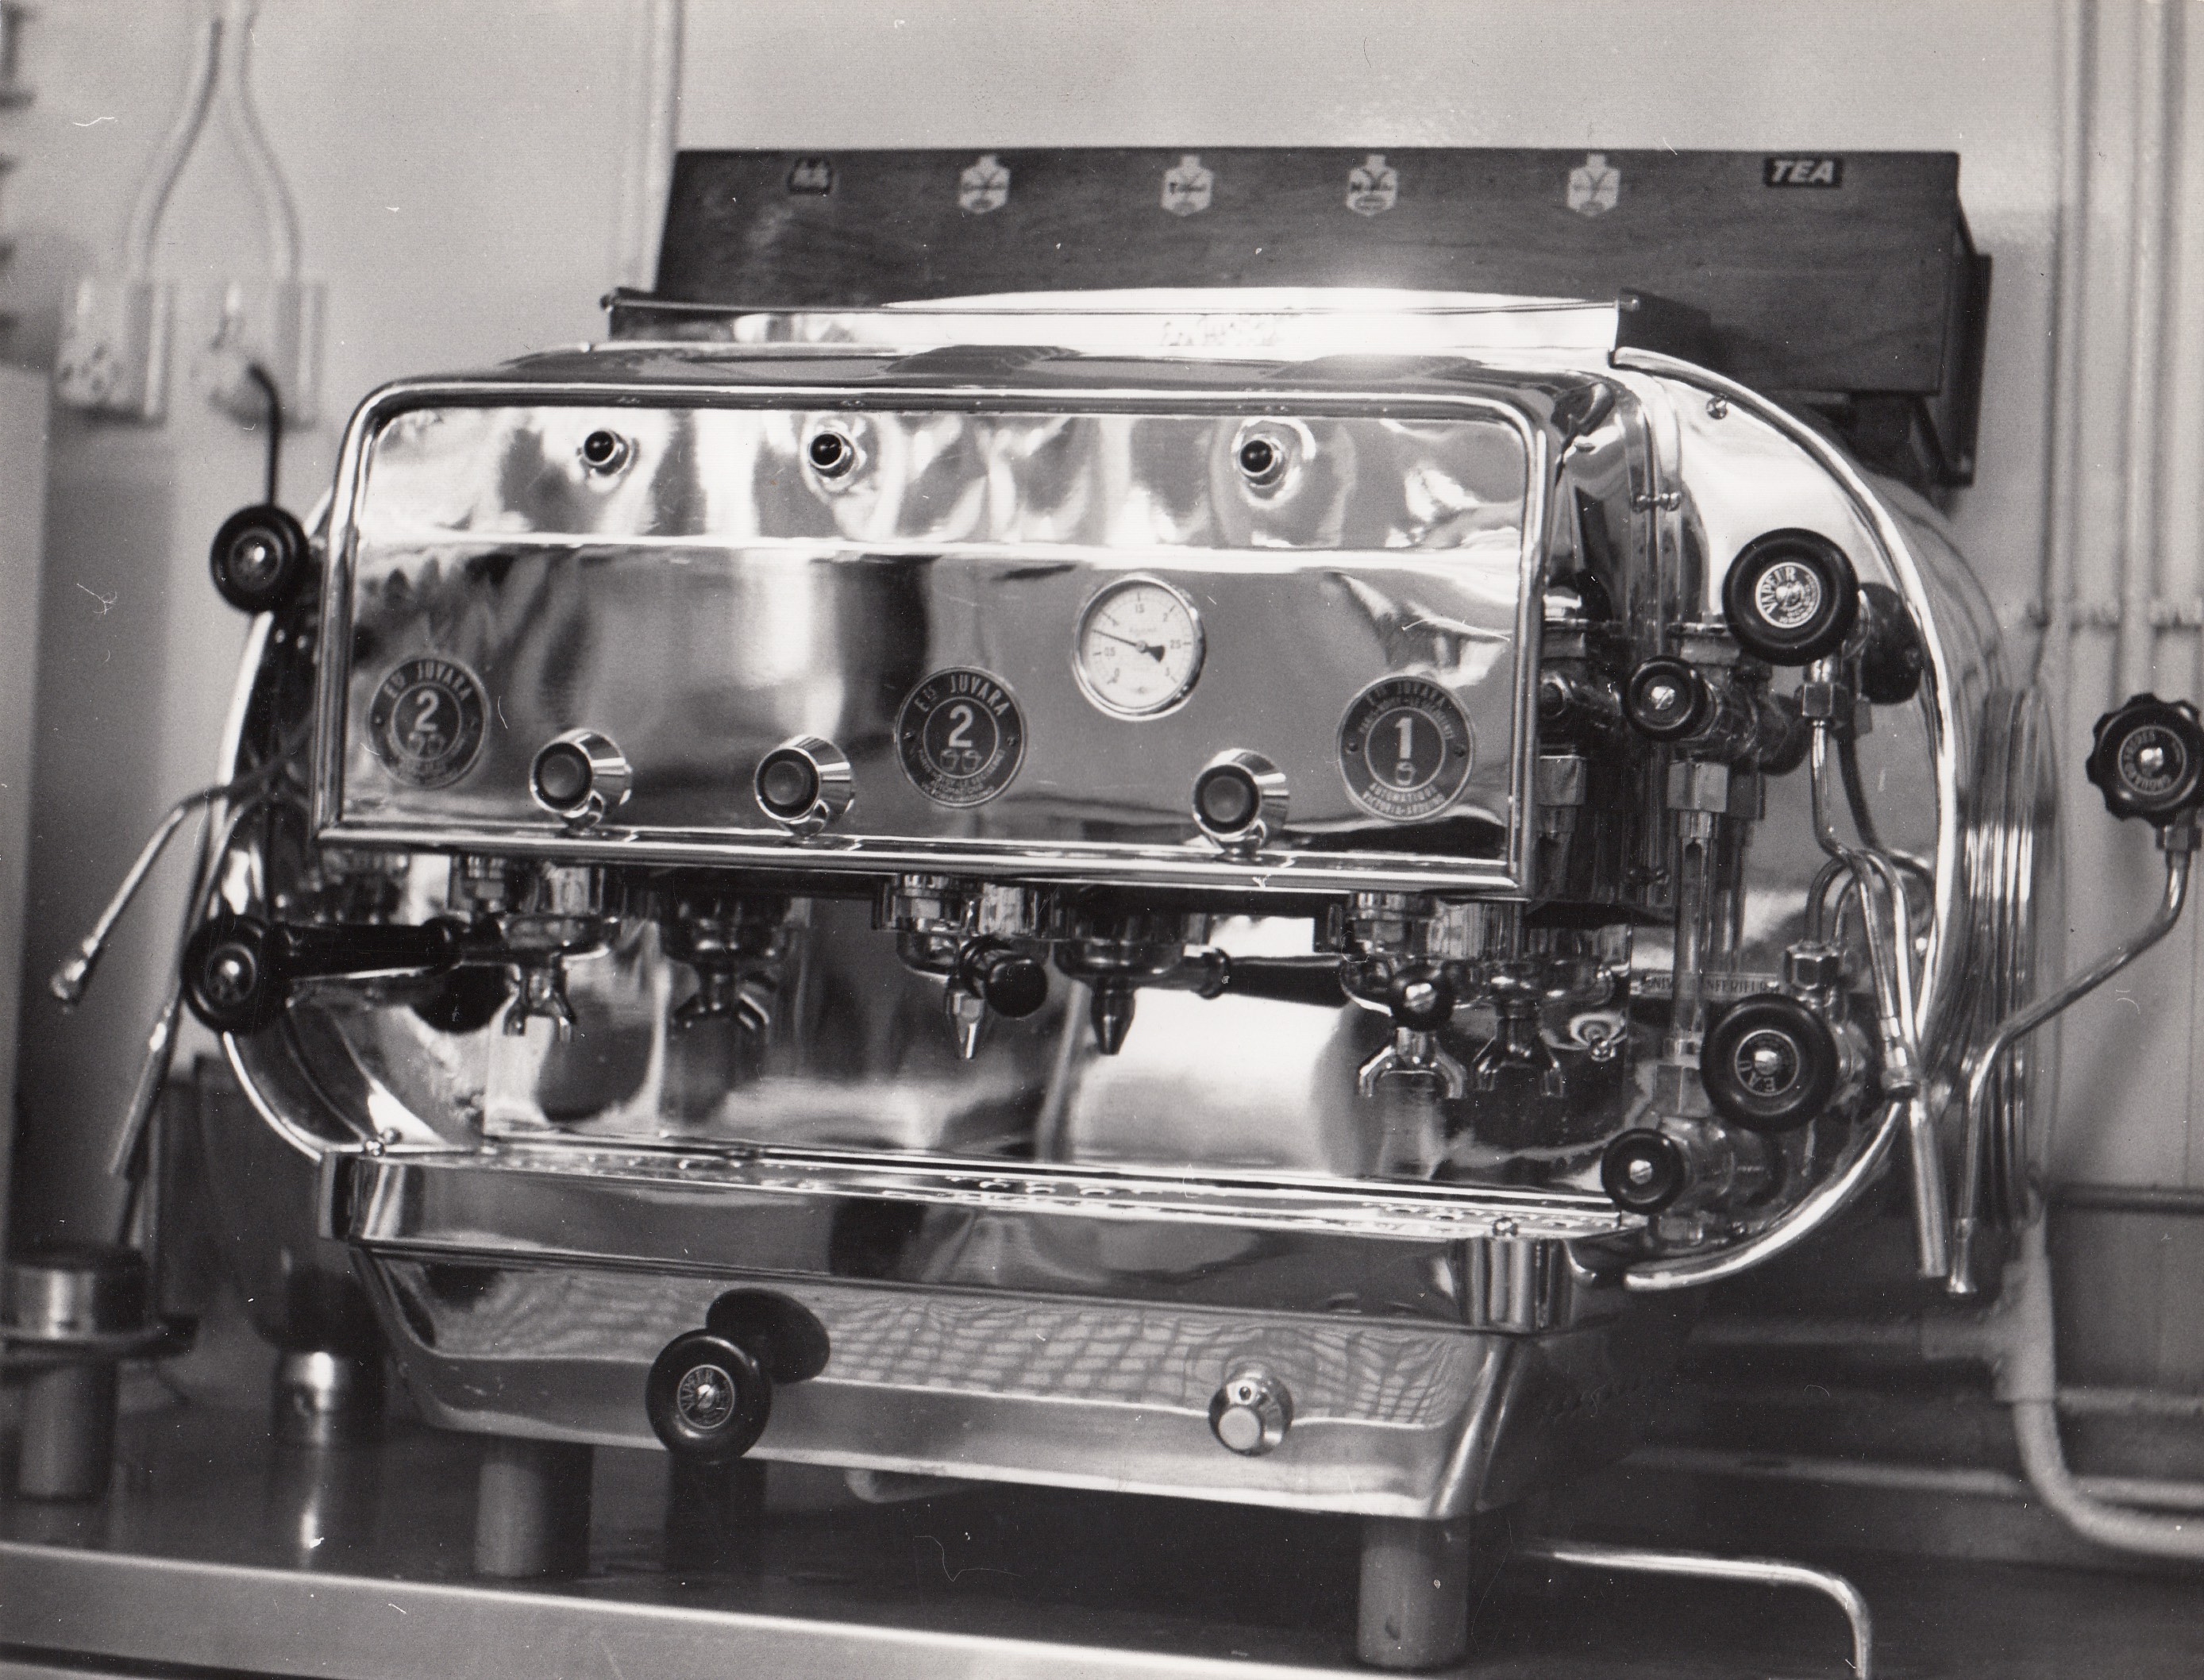 Machines à café 